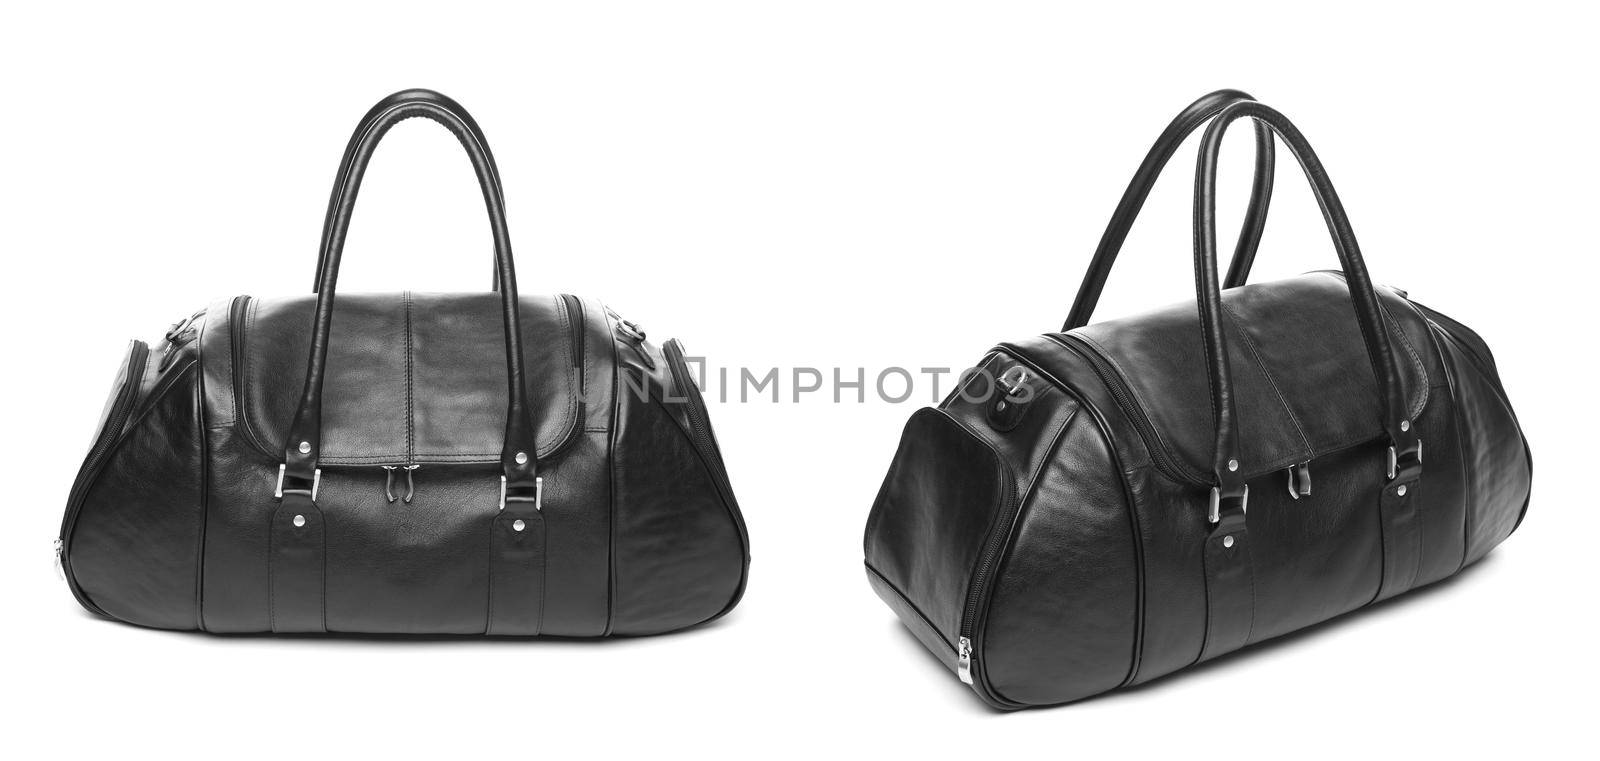 new travel bag fashion case black leather isolated